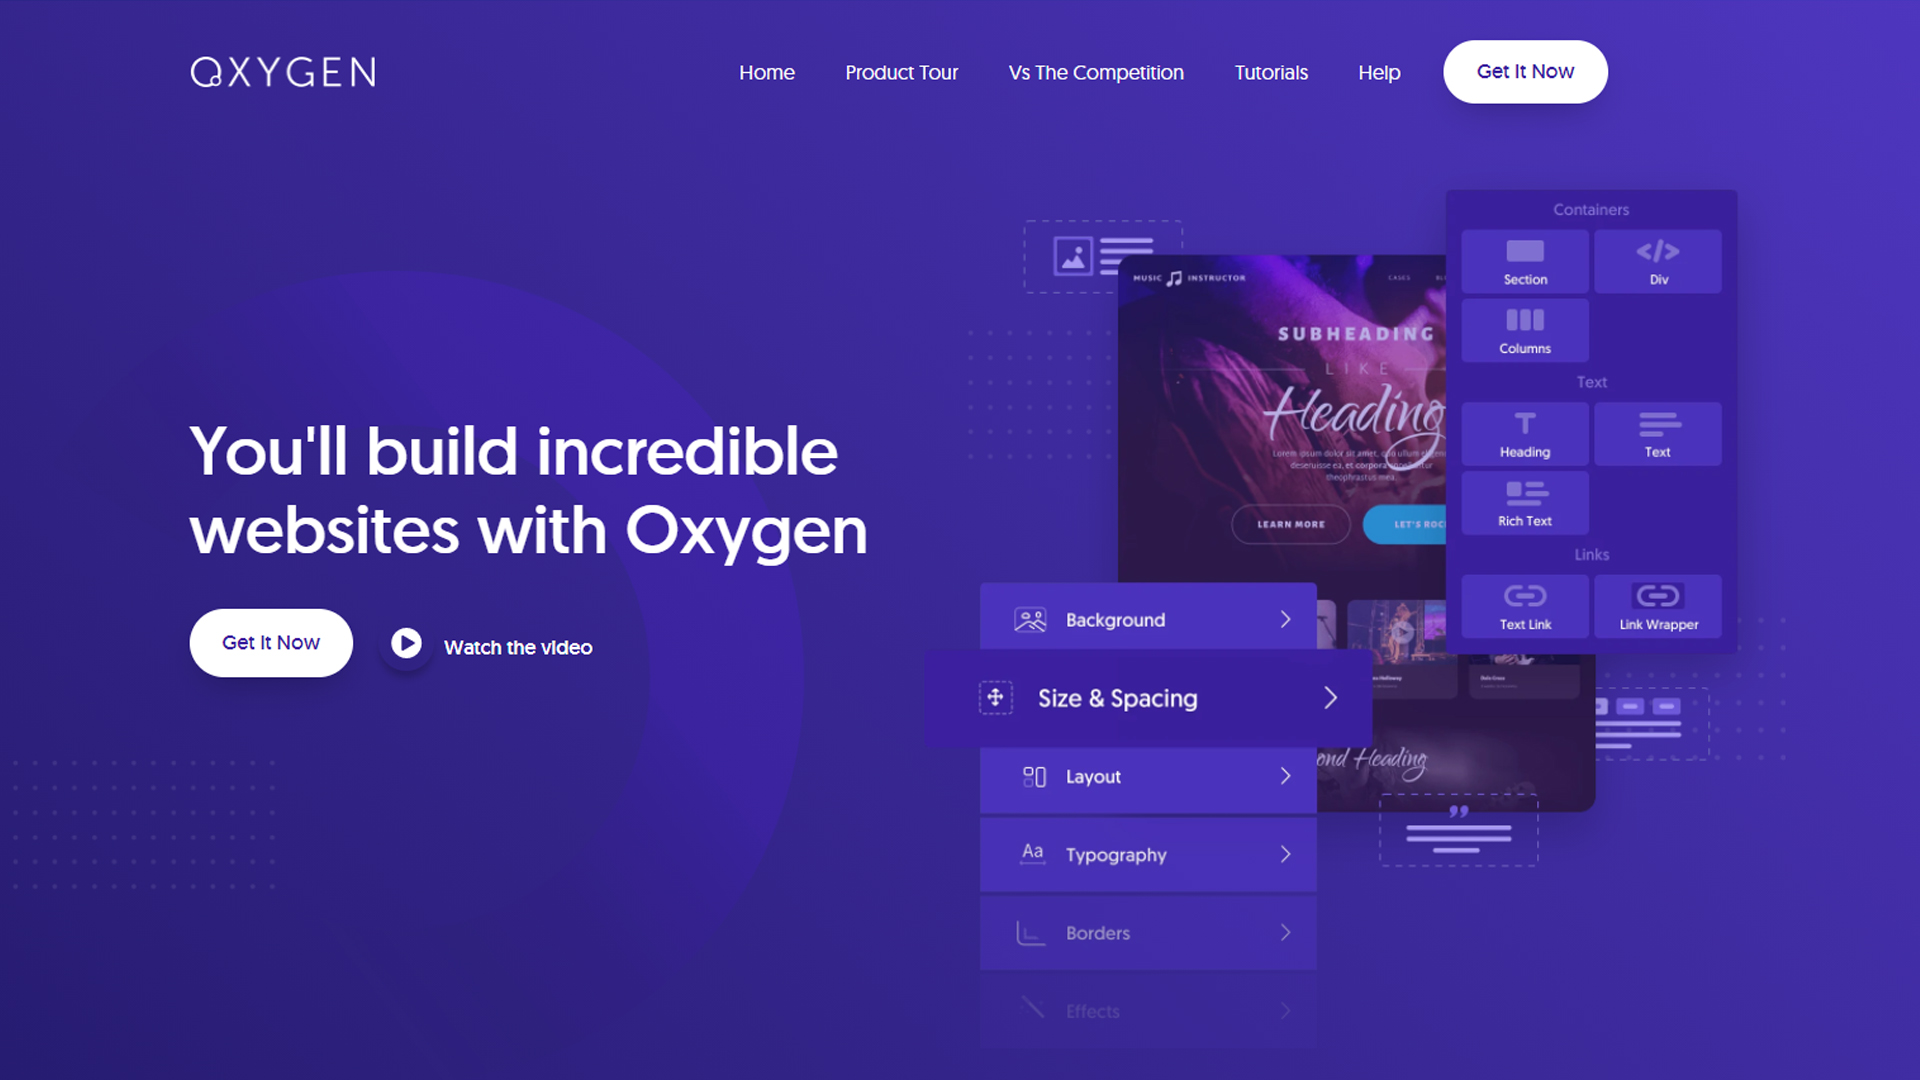 Oxygen's homepage